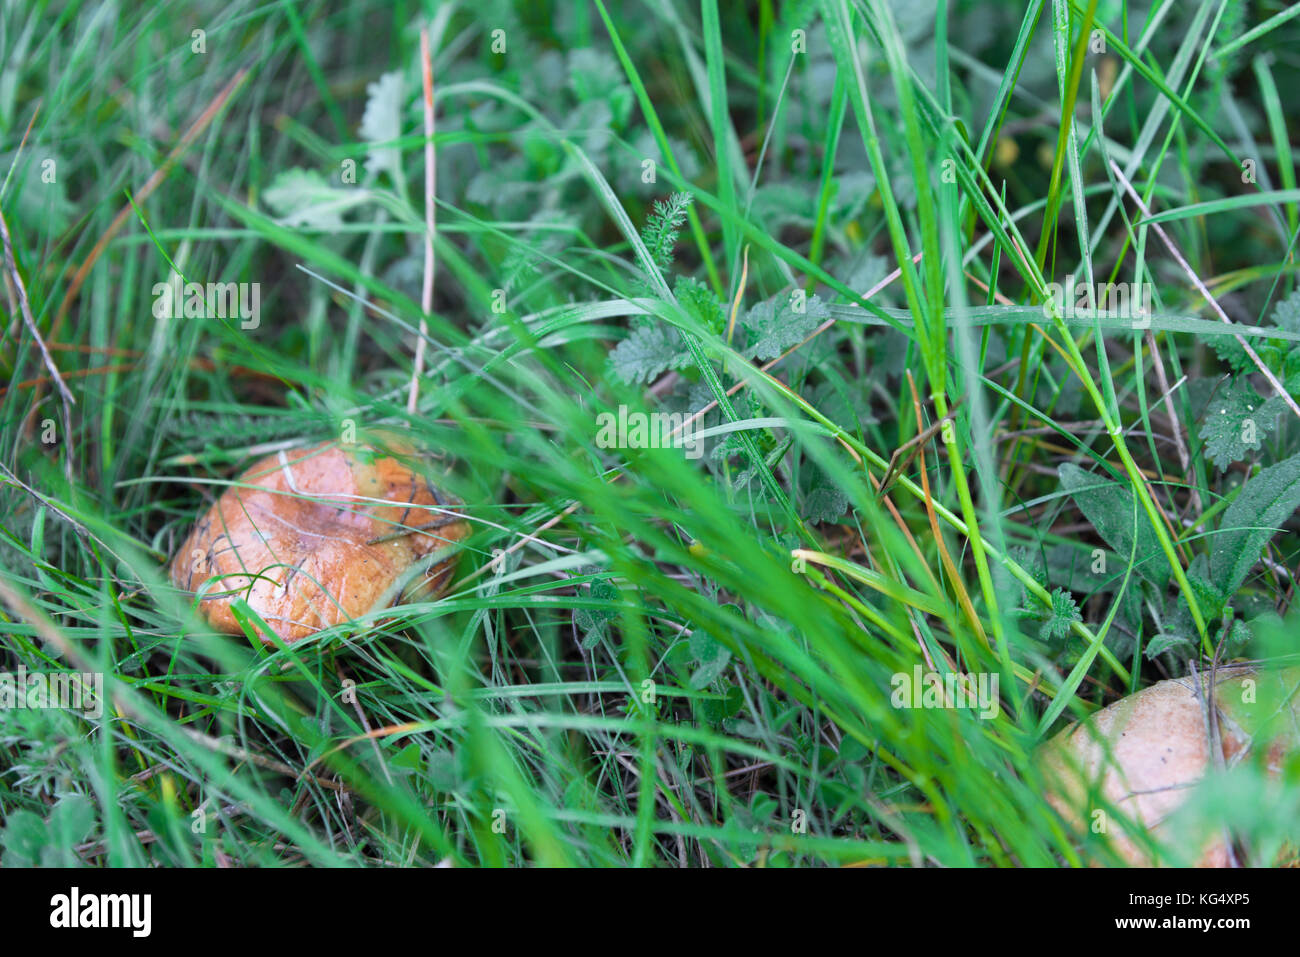 Mushroom Suillus closeup in green grass Stock Photo